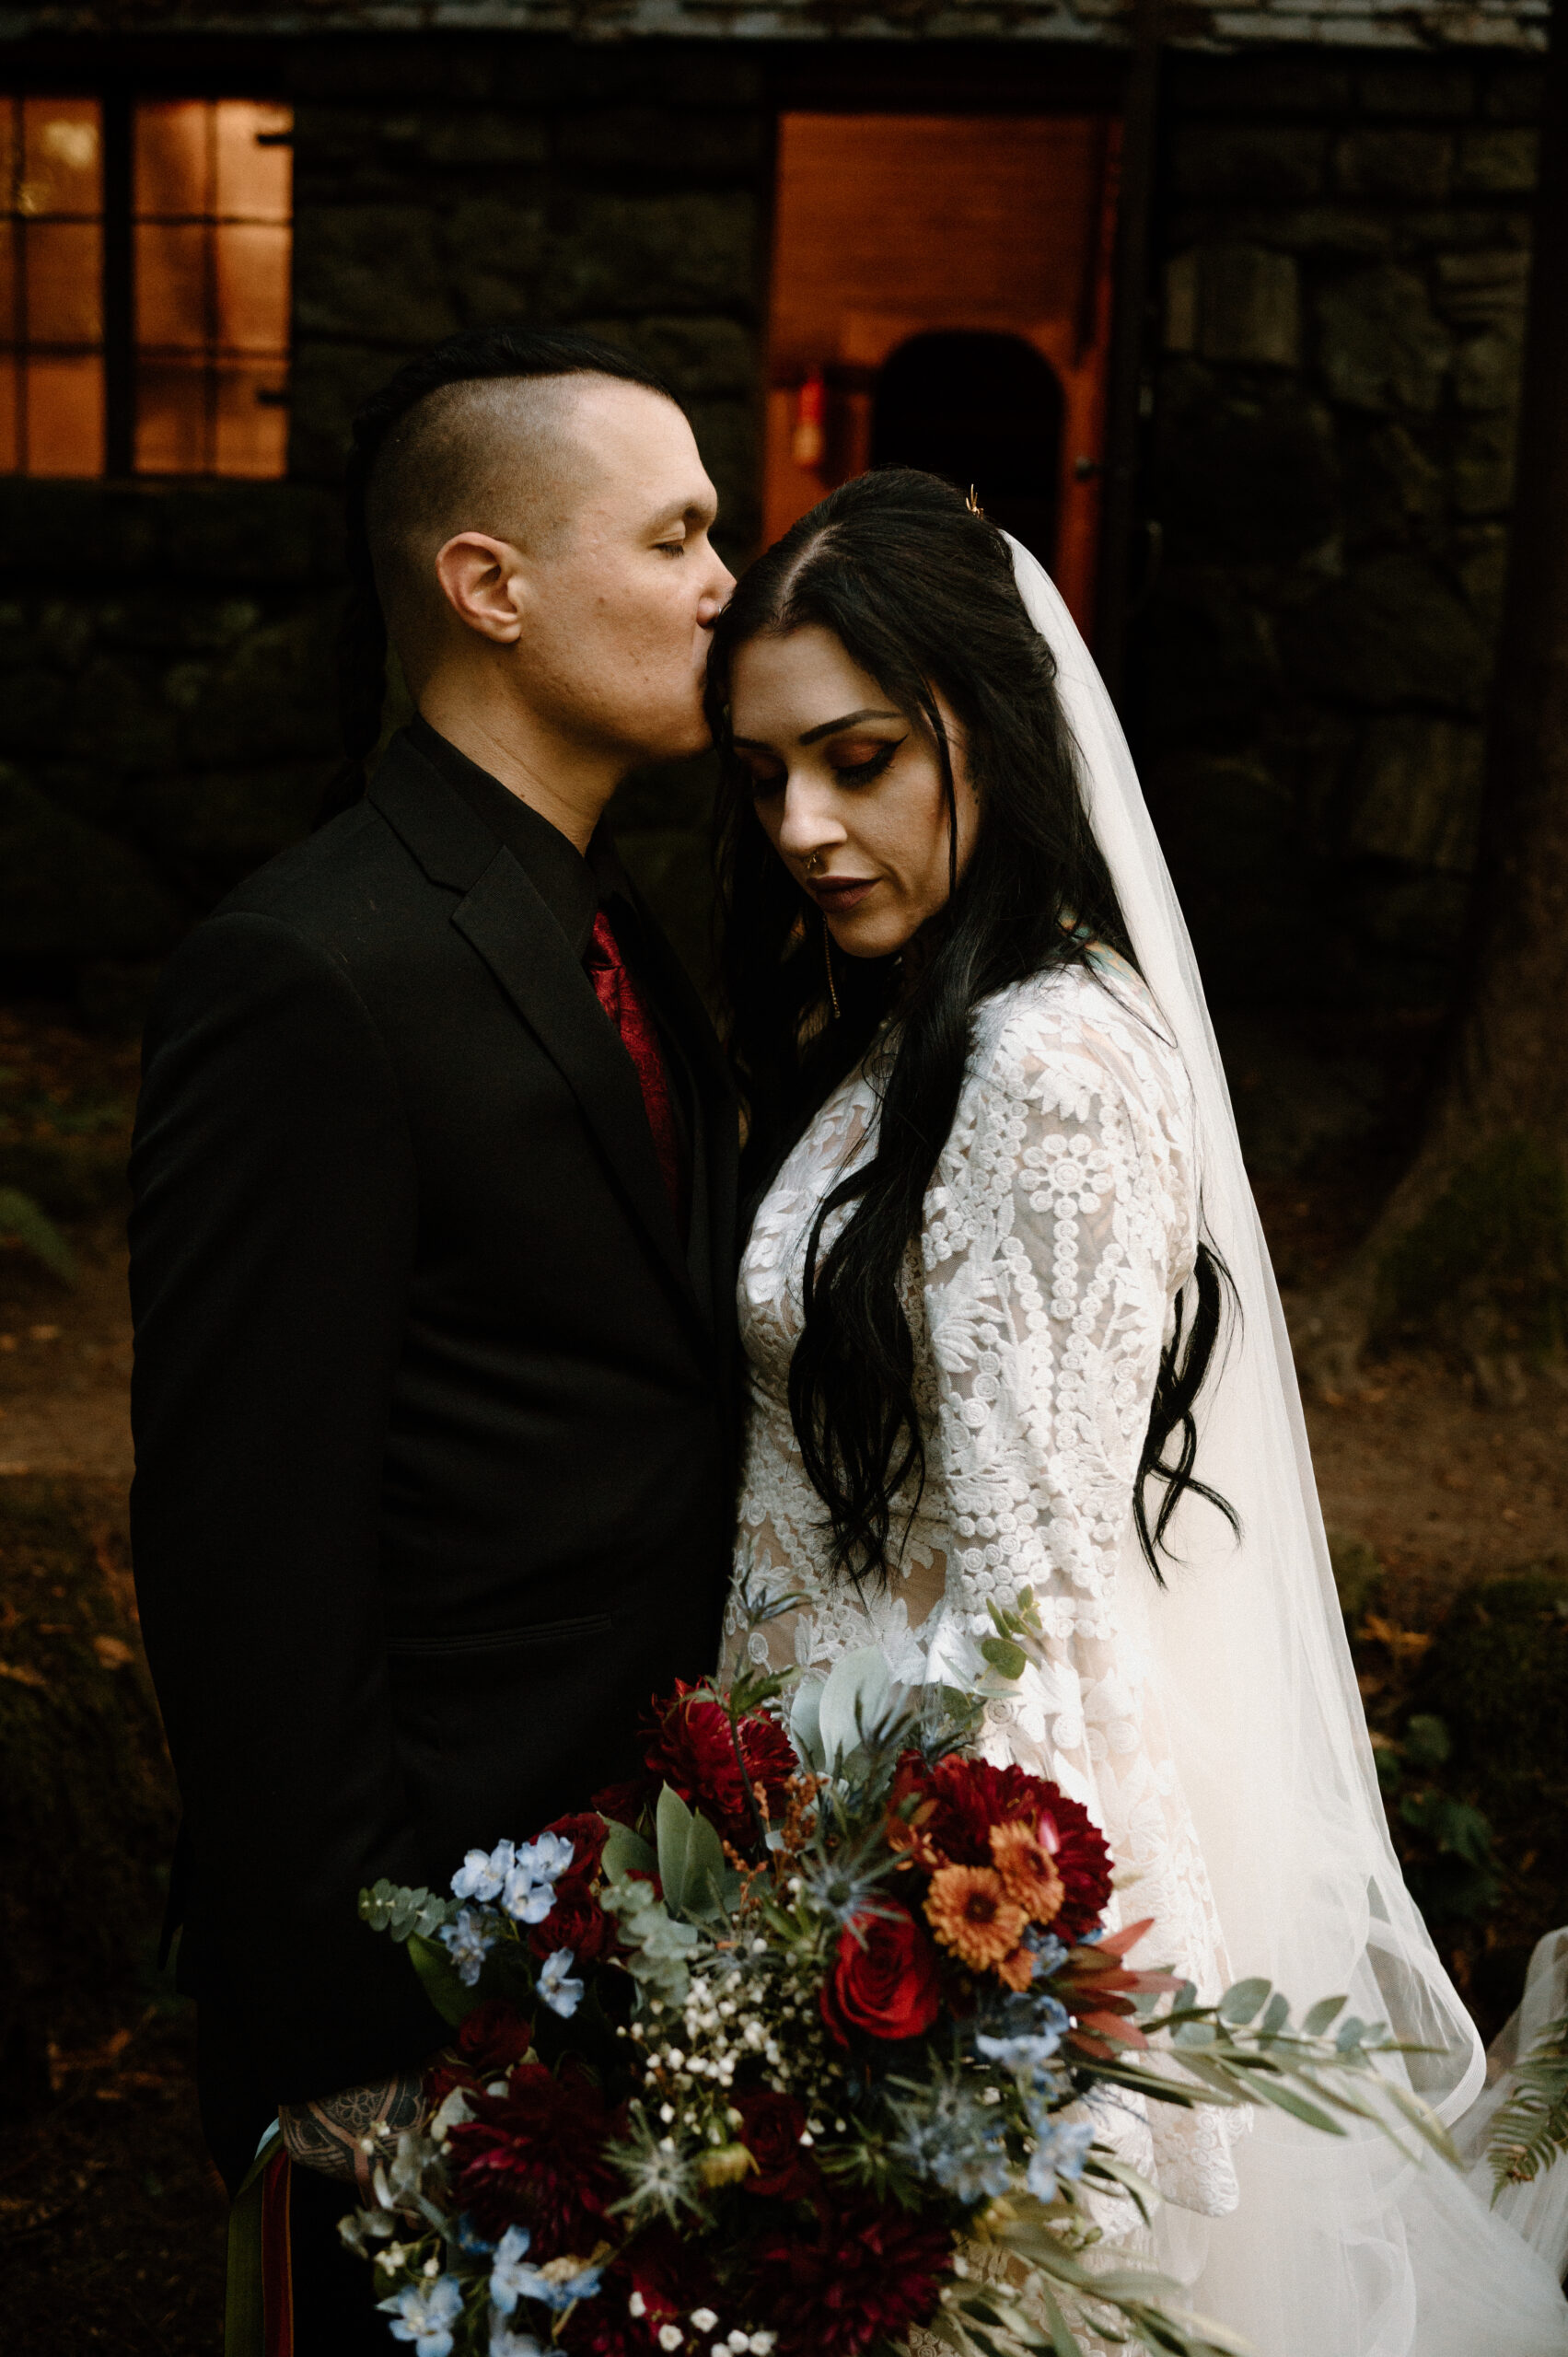 Portland or fall wedding, Gothic Wedding photographer, Alternative couples, tattooed couples, Photography, Vancouver Wa Wedding Photographer, Wedding Photography Vancouver Wa